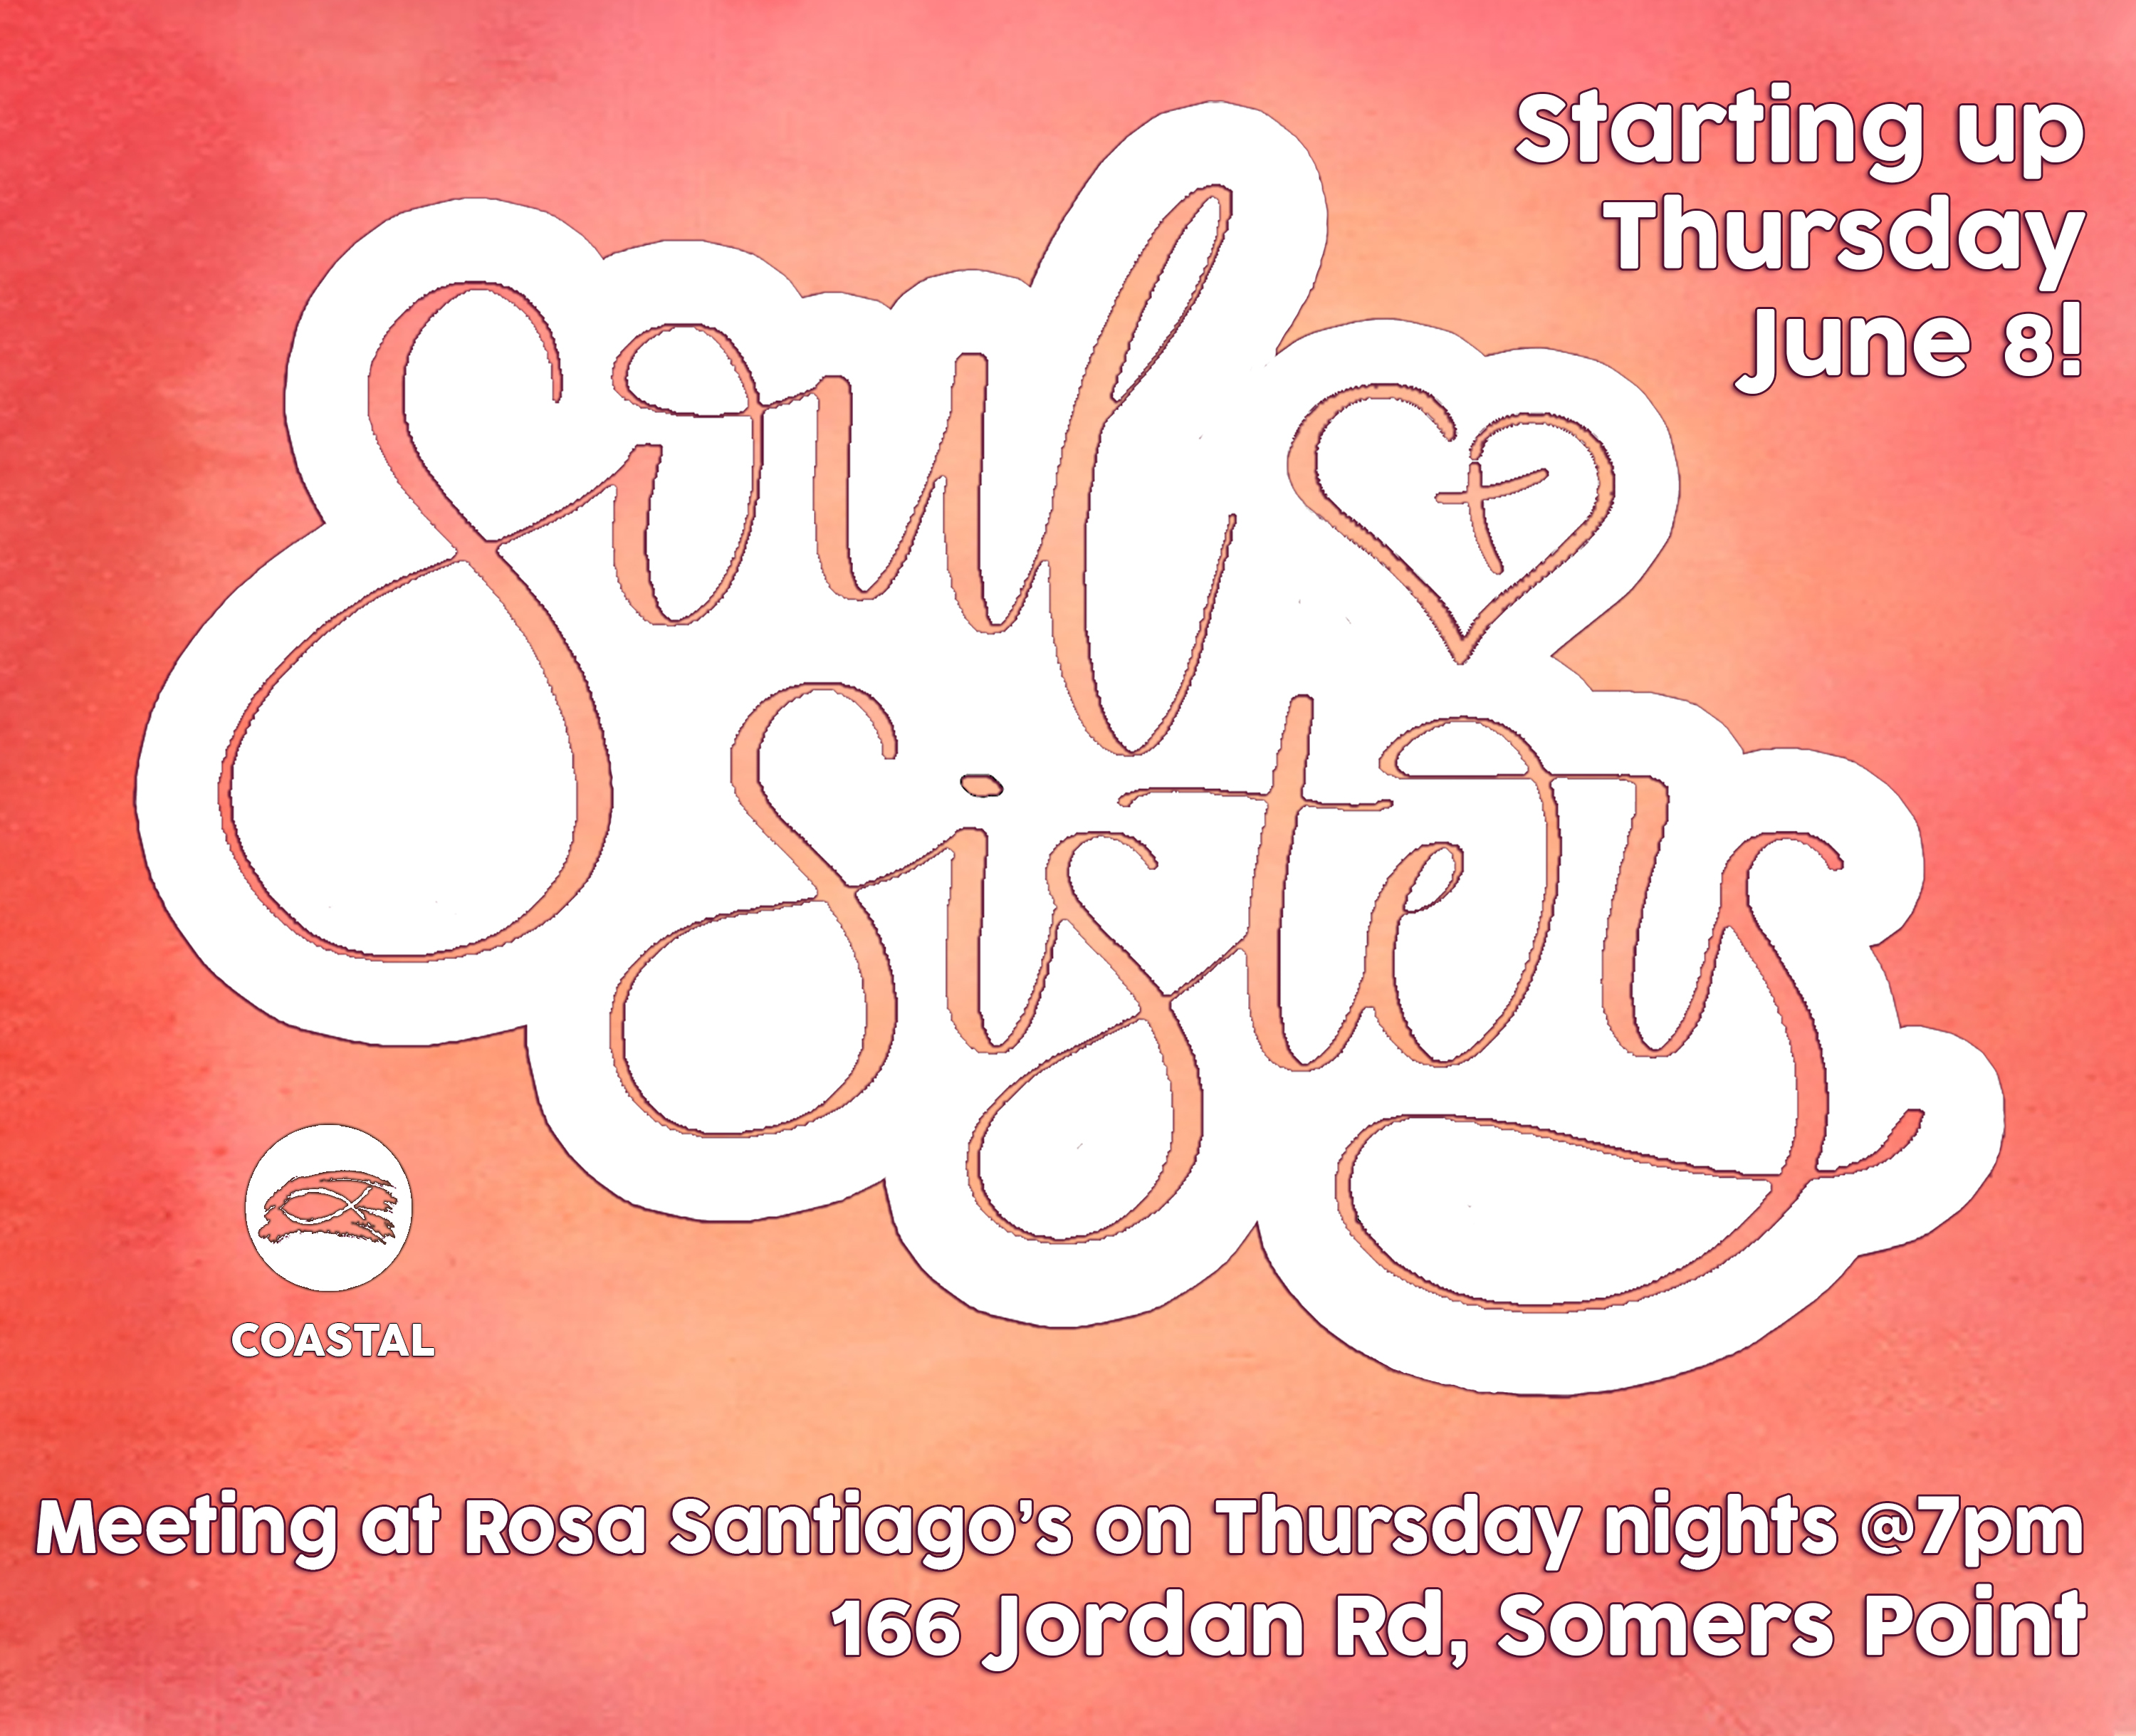 Coastal Christian with Pastor Matt Stokes - Women's Ministry - Soul Sisters